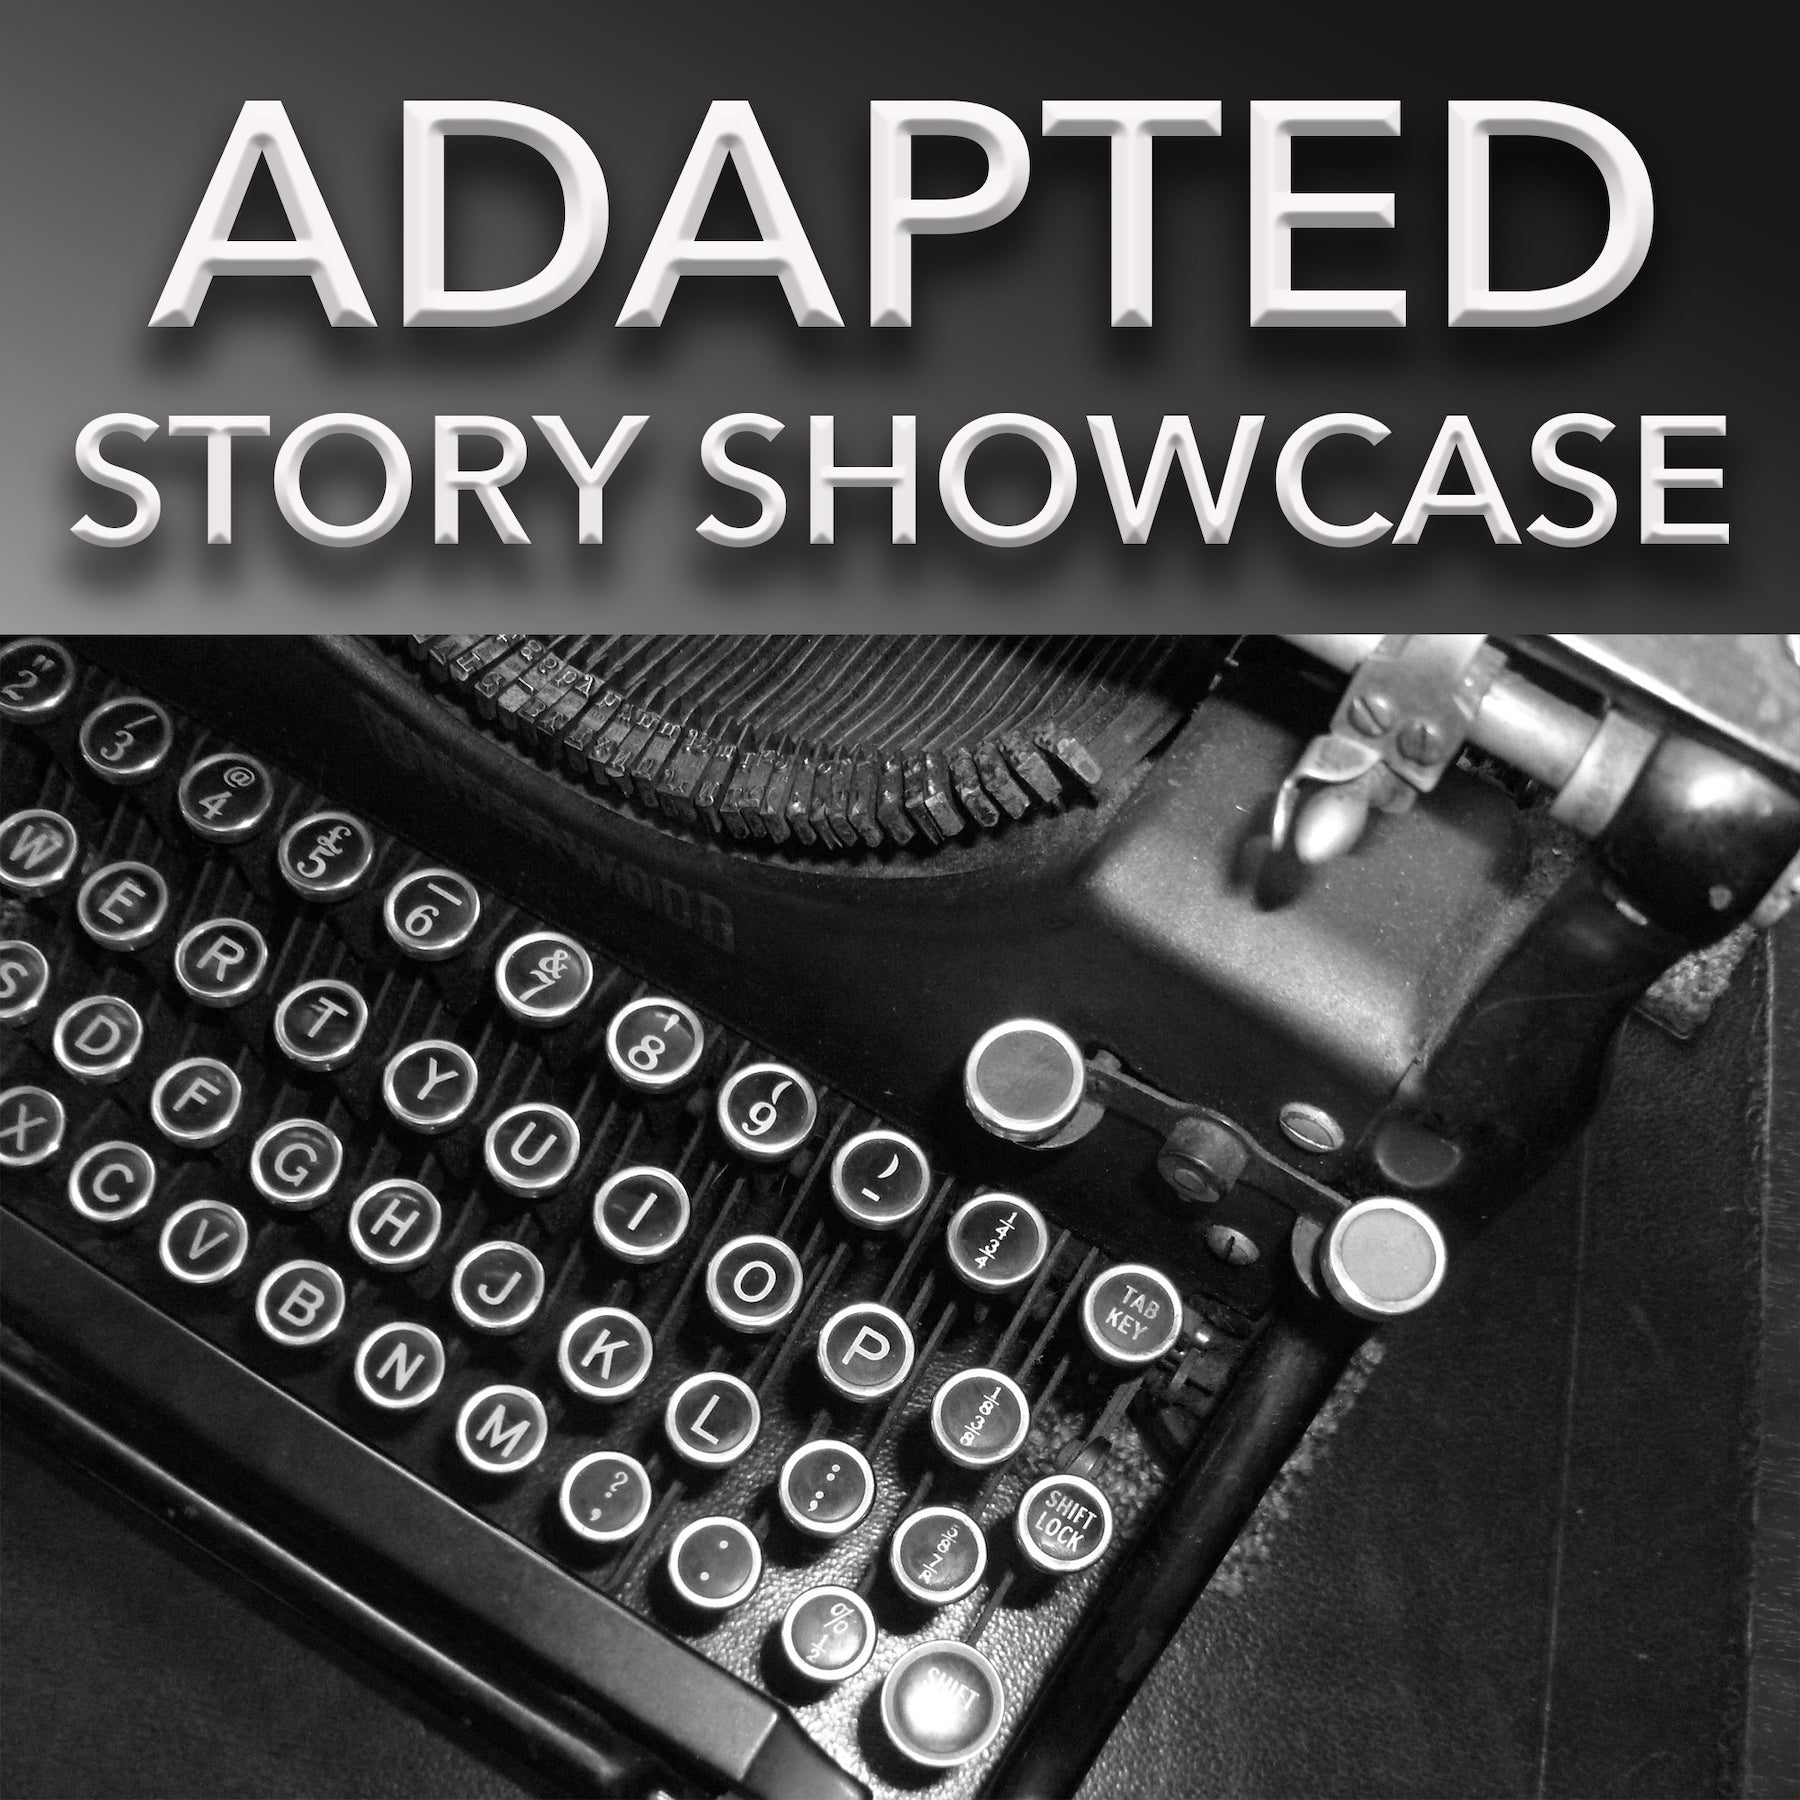 ADAPTED STORY SHOWCASE - Vintage Typewriter